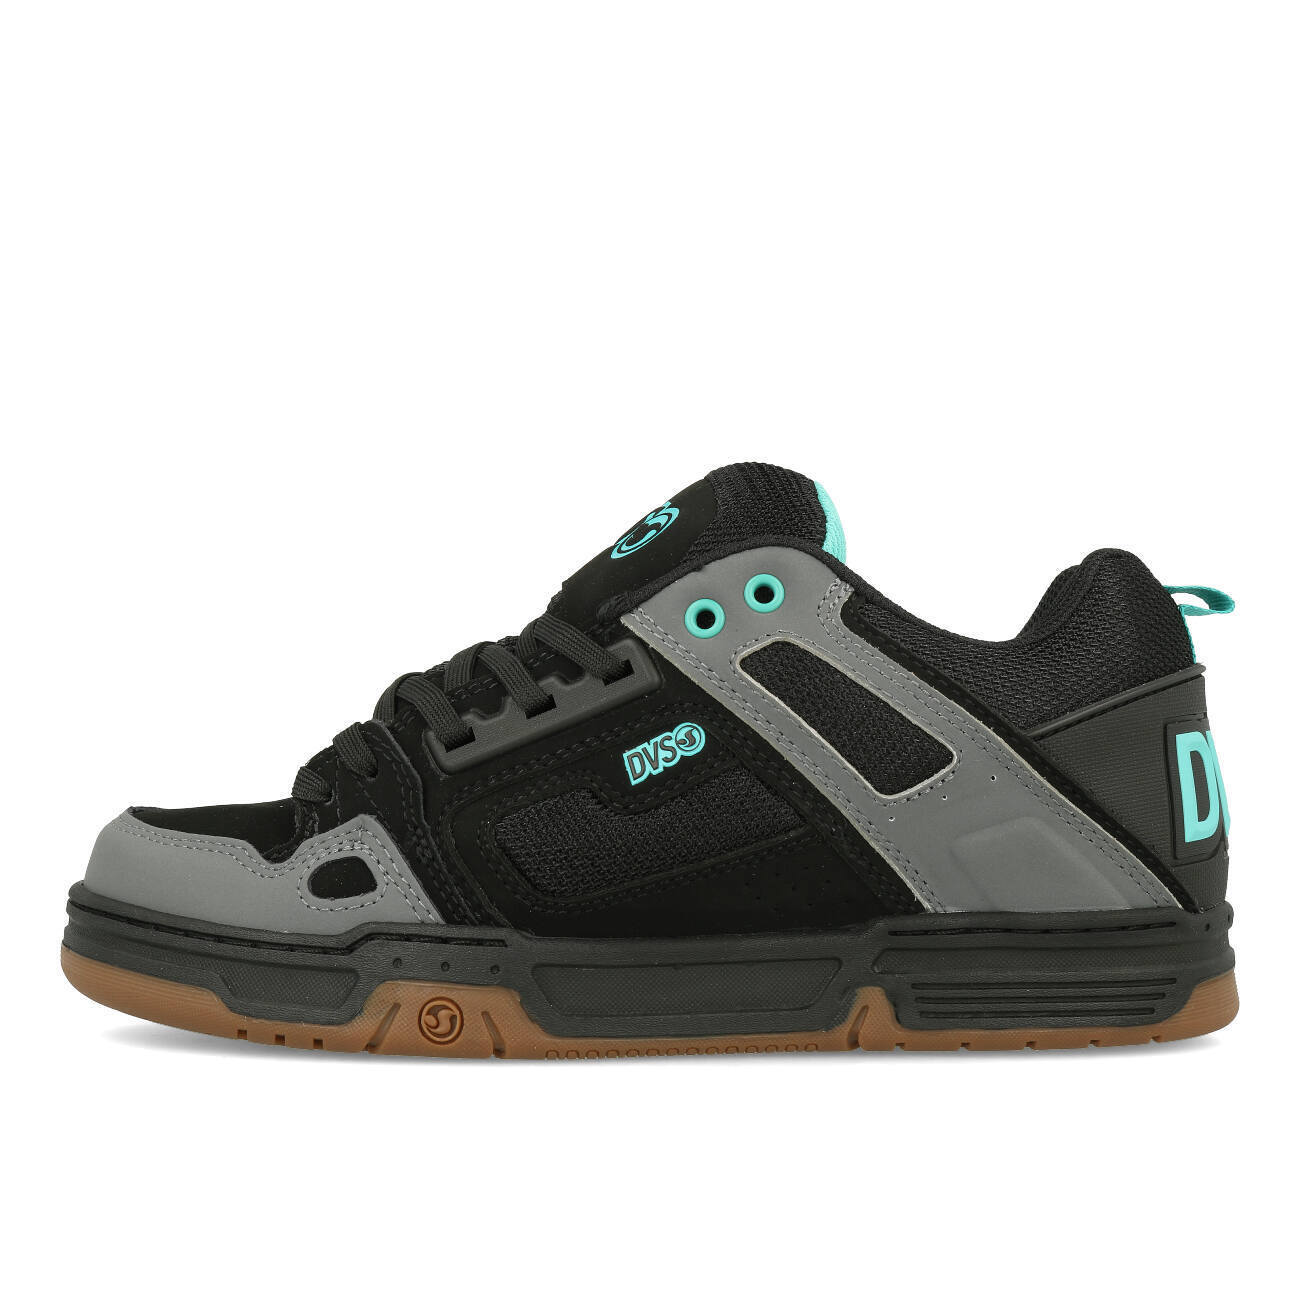 DVS Comanche Herren Black Turquoise Gum Nubuck Schuhe Sneaker Skaterschuhe